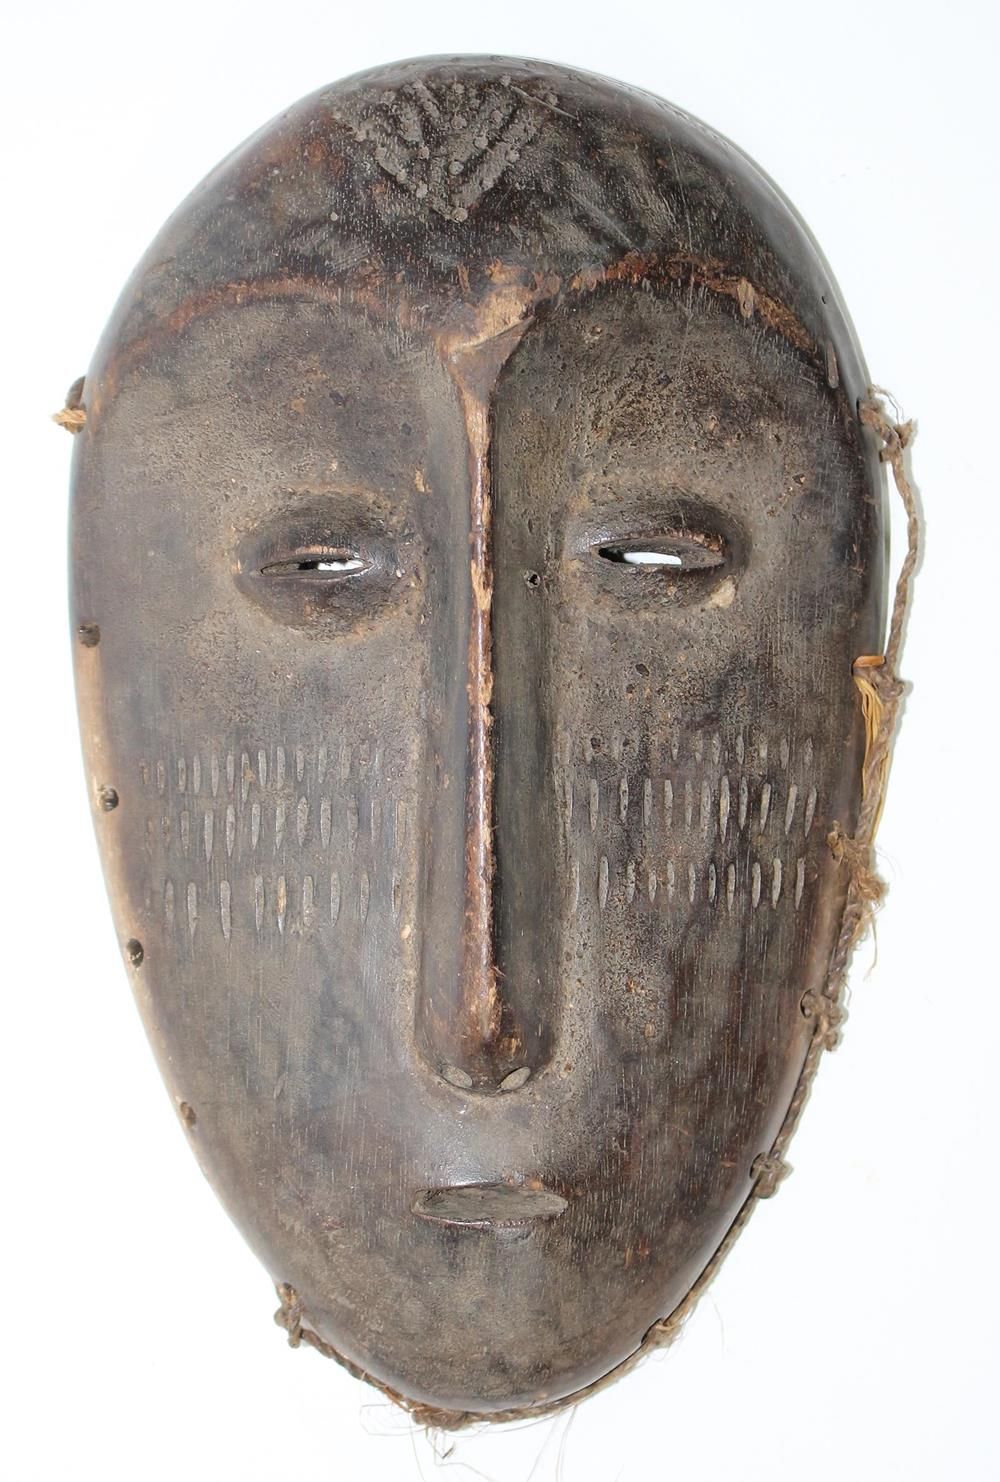 Lega Maske Old mask with stegmase. Tattoos on forehead u. Cheeks. Lenticular, ra&hellip;